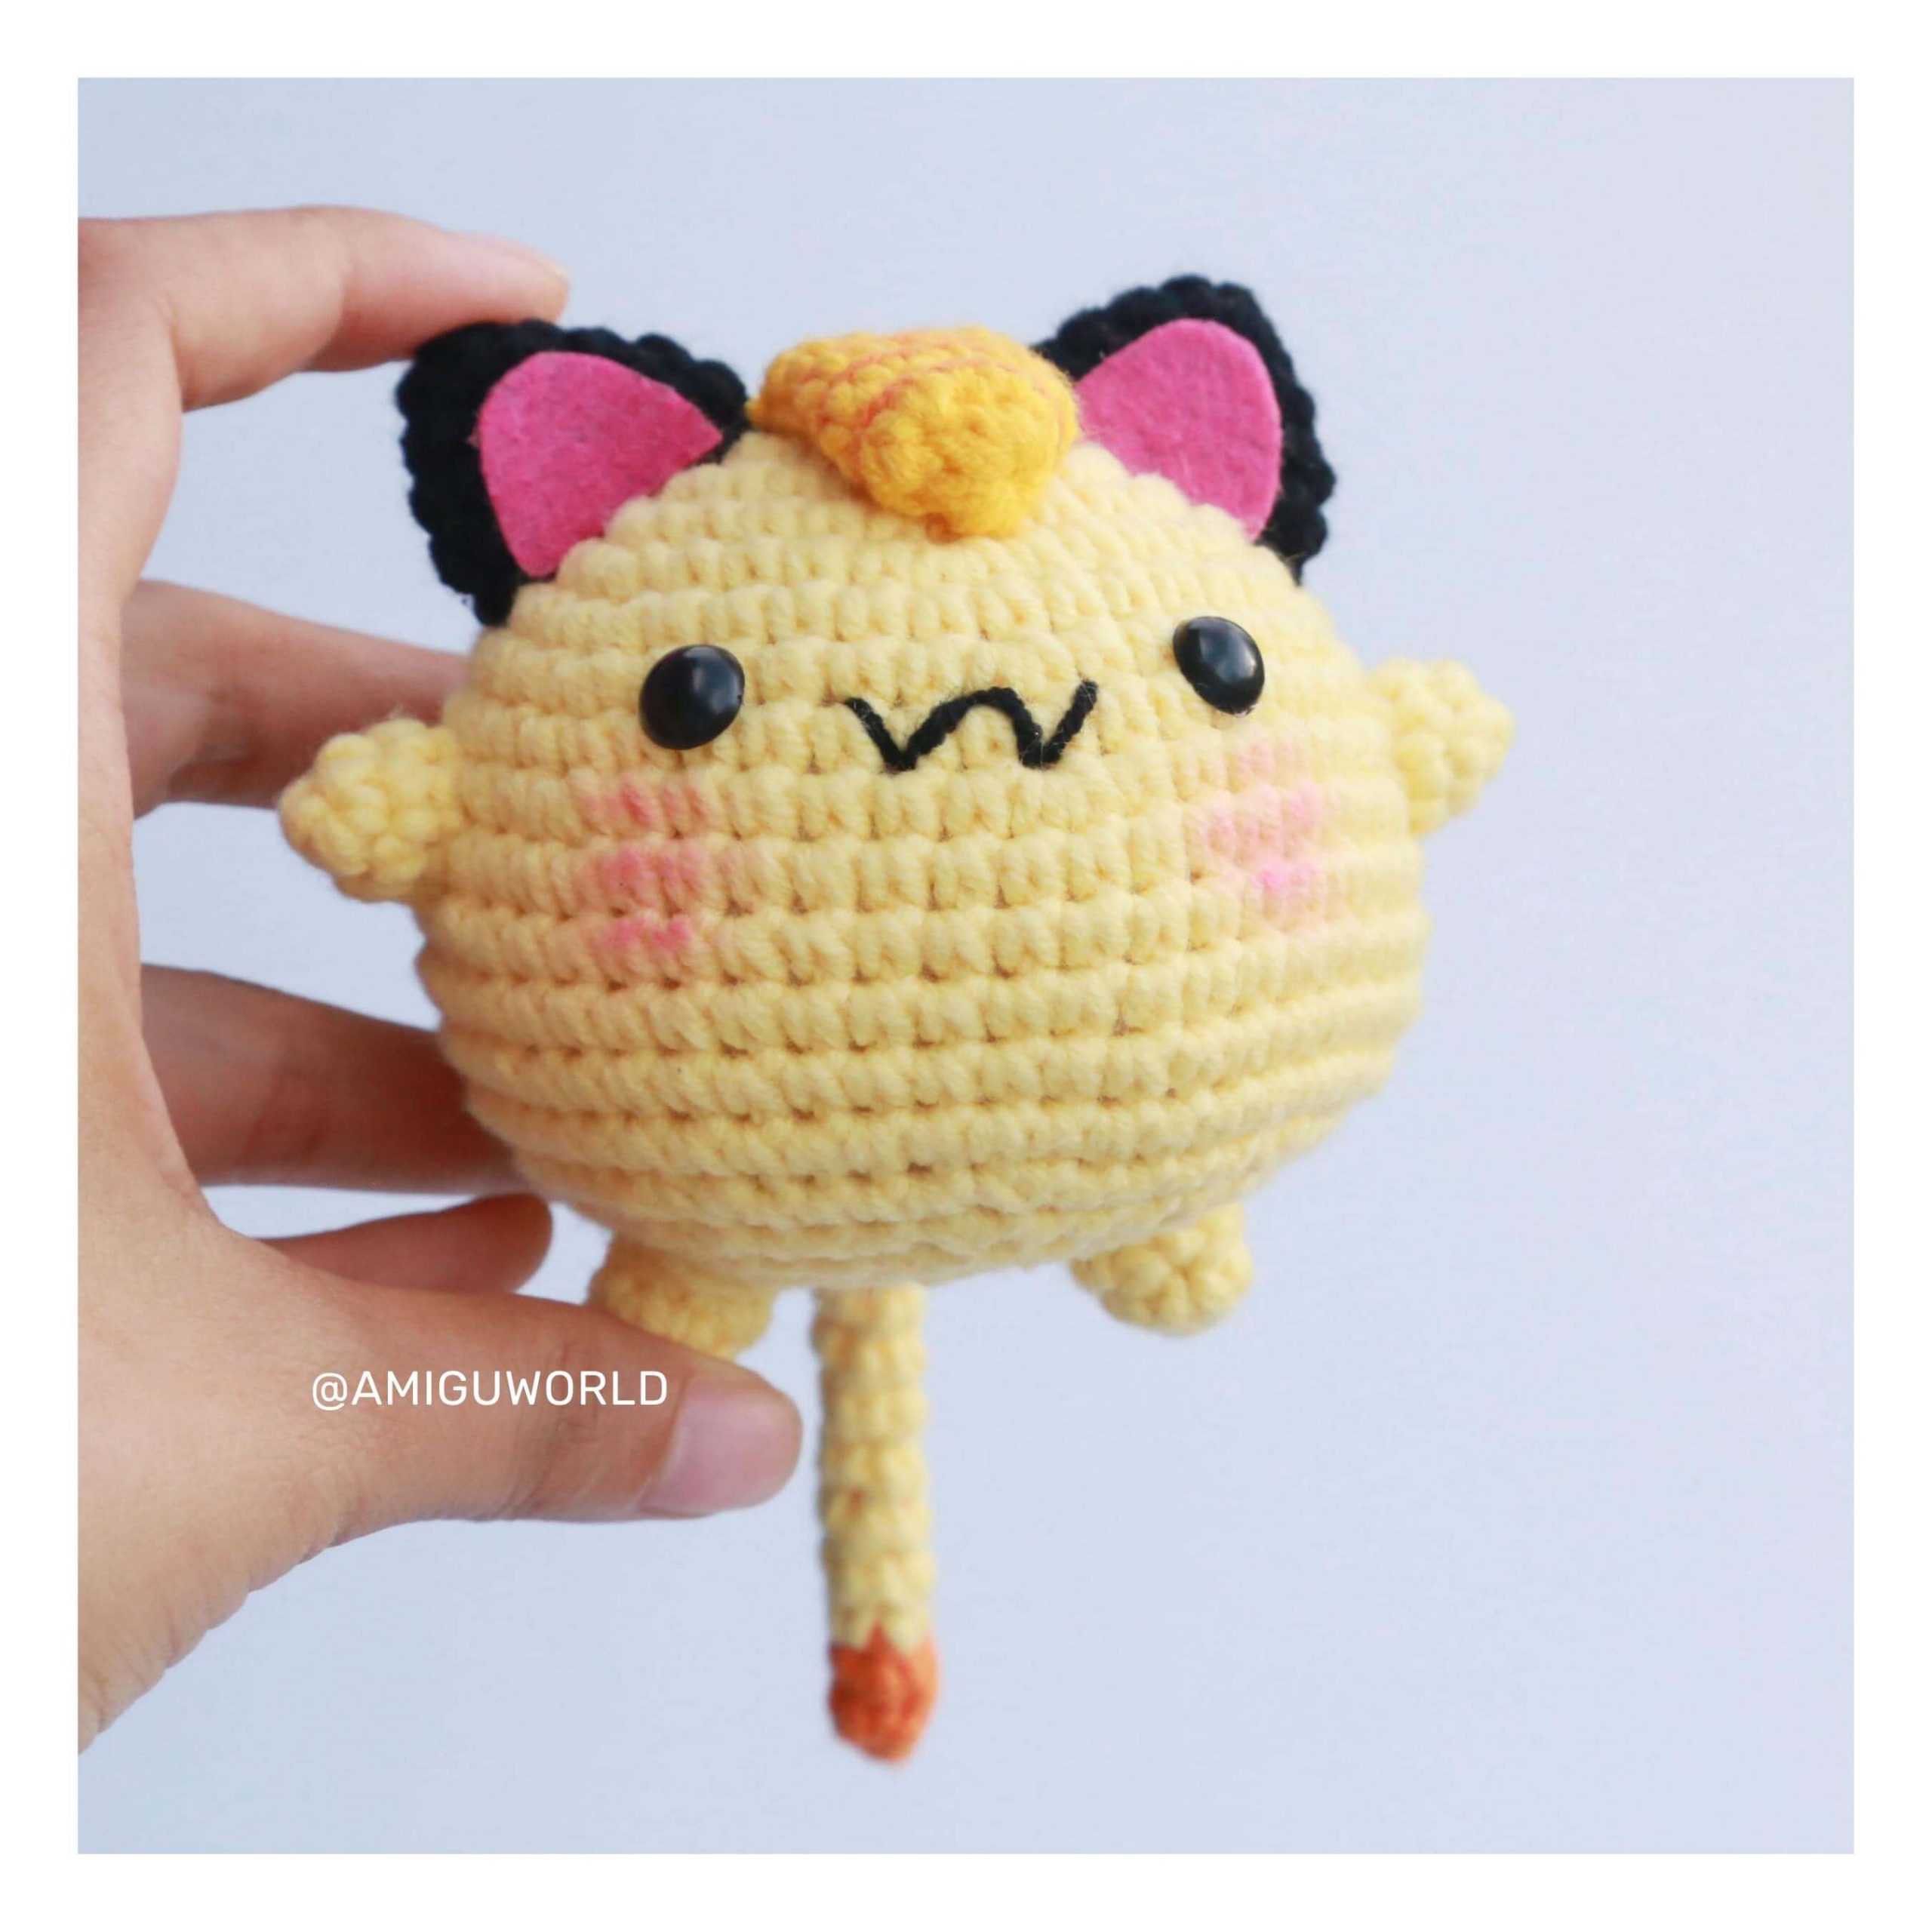 Meowth-amigurumi-crochet-pattern-by-AmiguWorld (10)